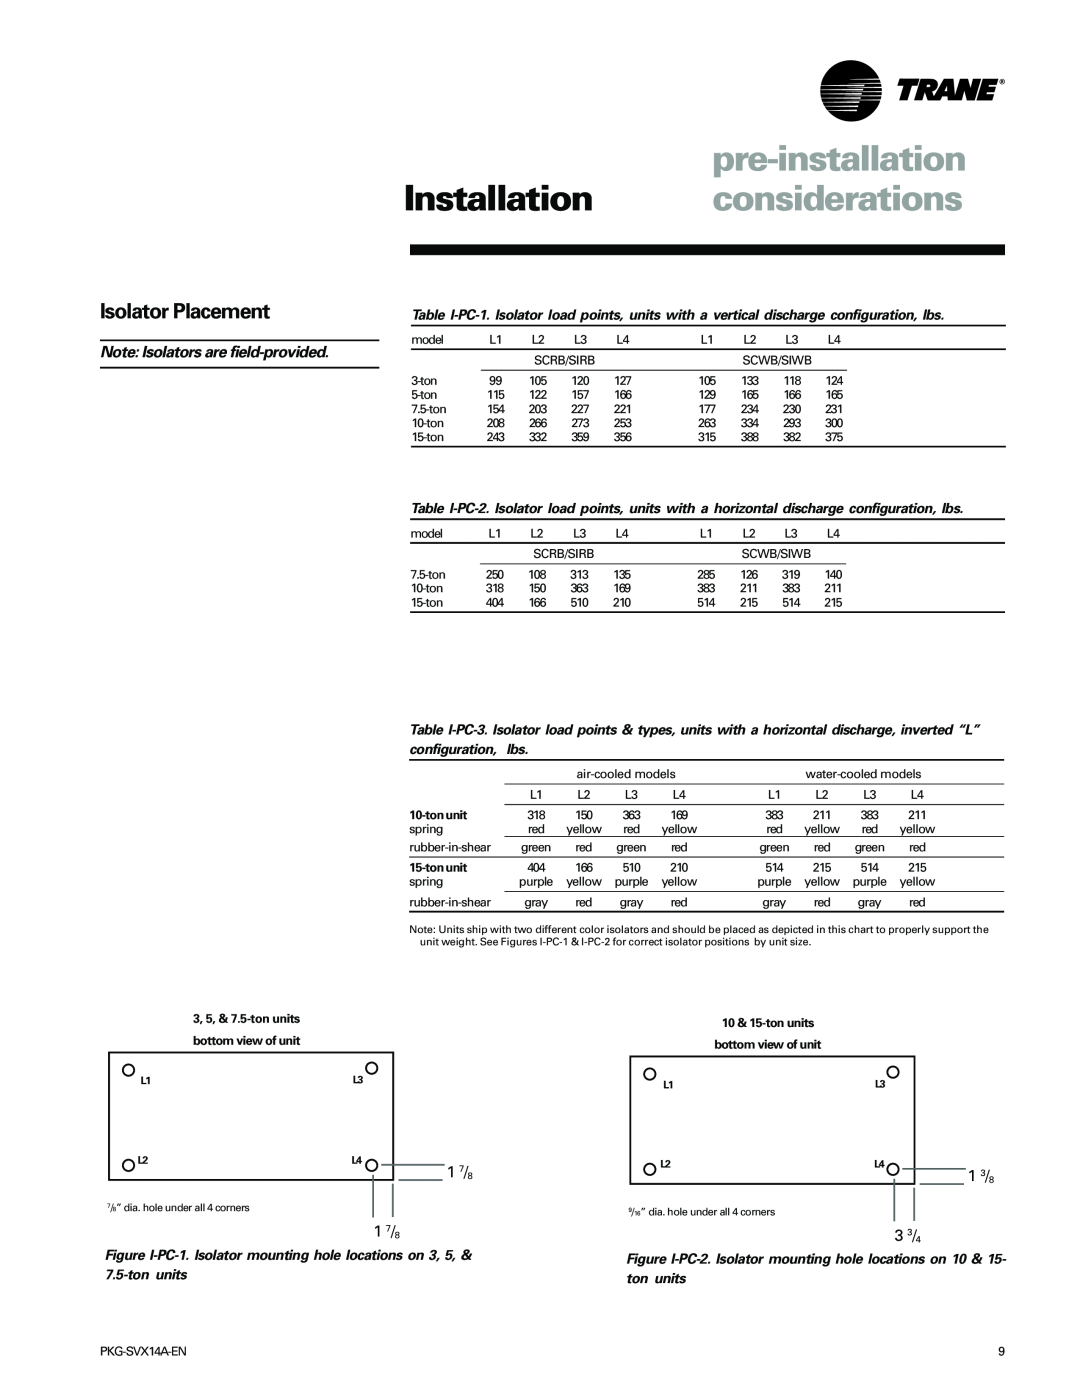 Trane SCRH Isolator Placement, pre-installation Installation considerations, Note Isolators are field-provided, 1 7/8 